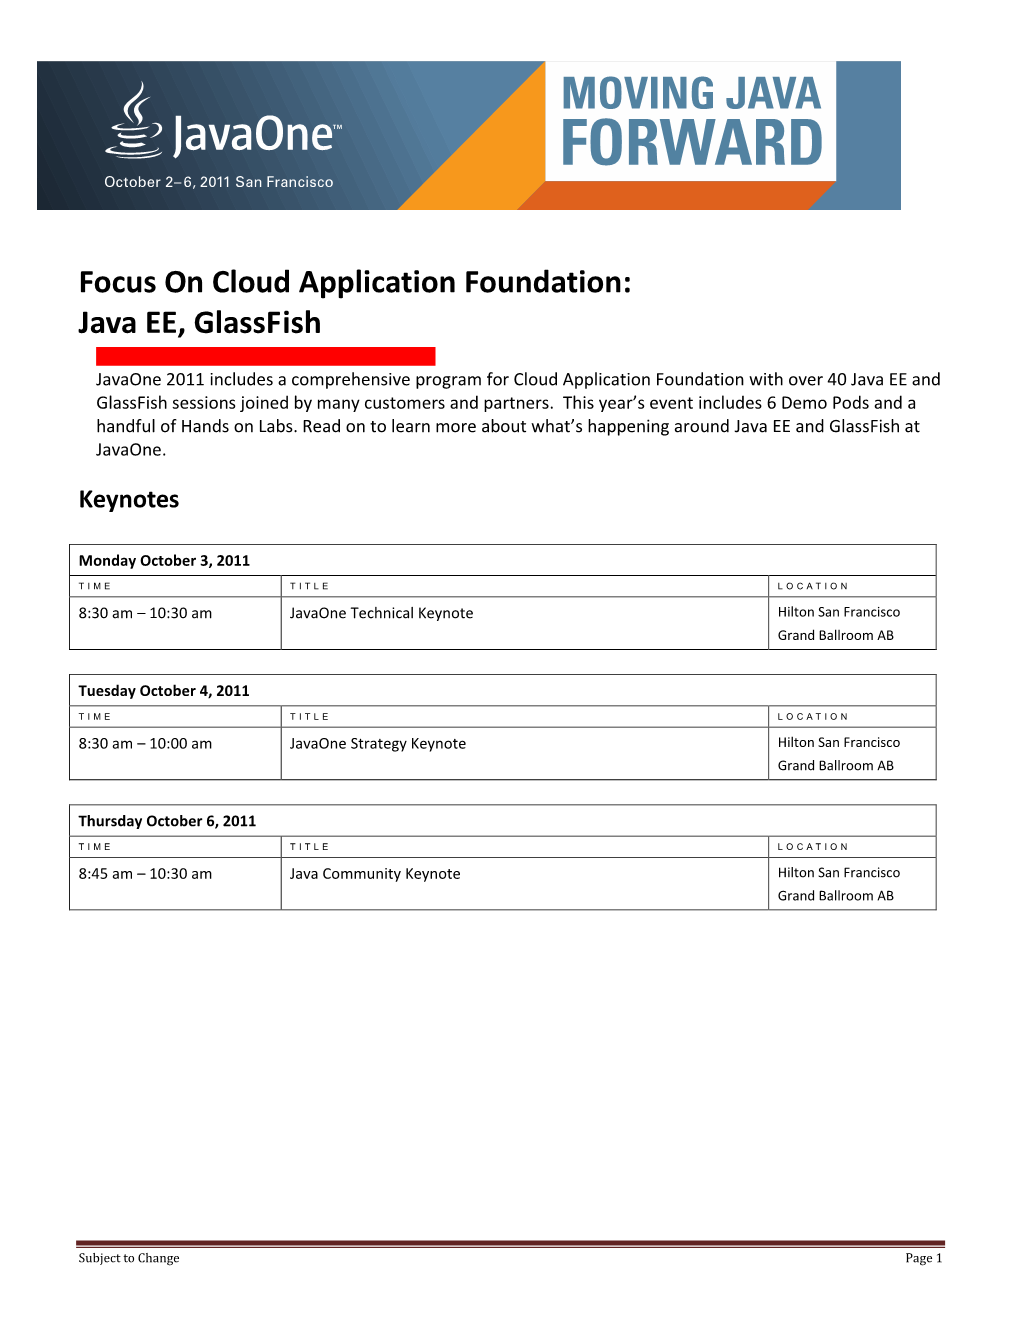 Focus on Cloud Application Foundation: Java EE, Glassfish